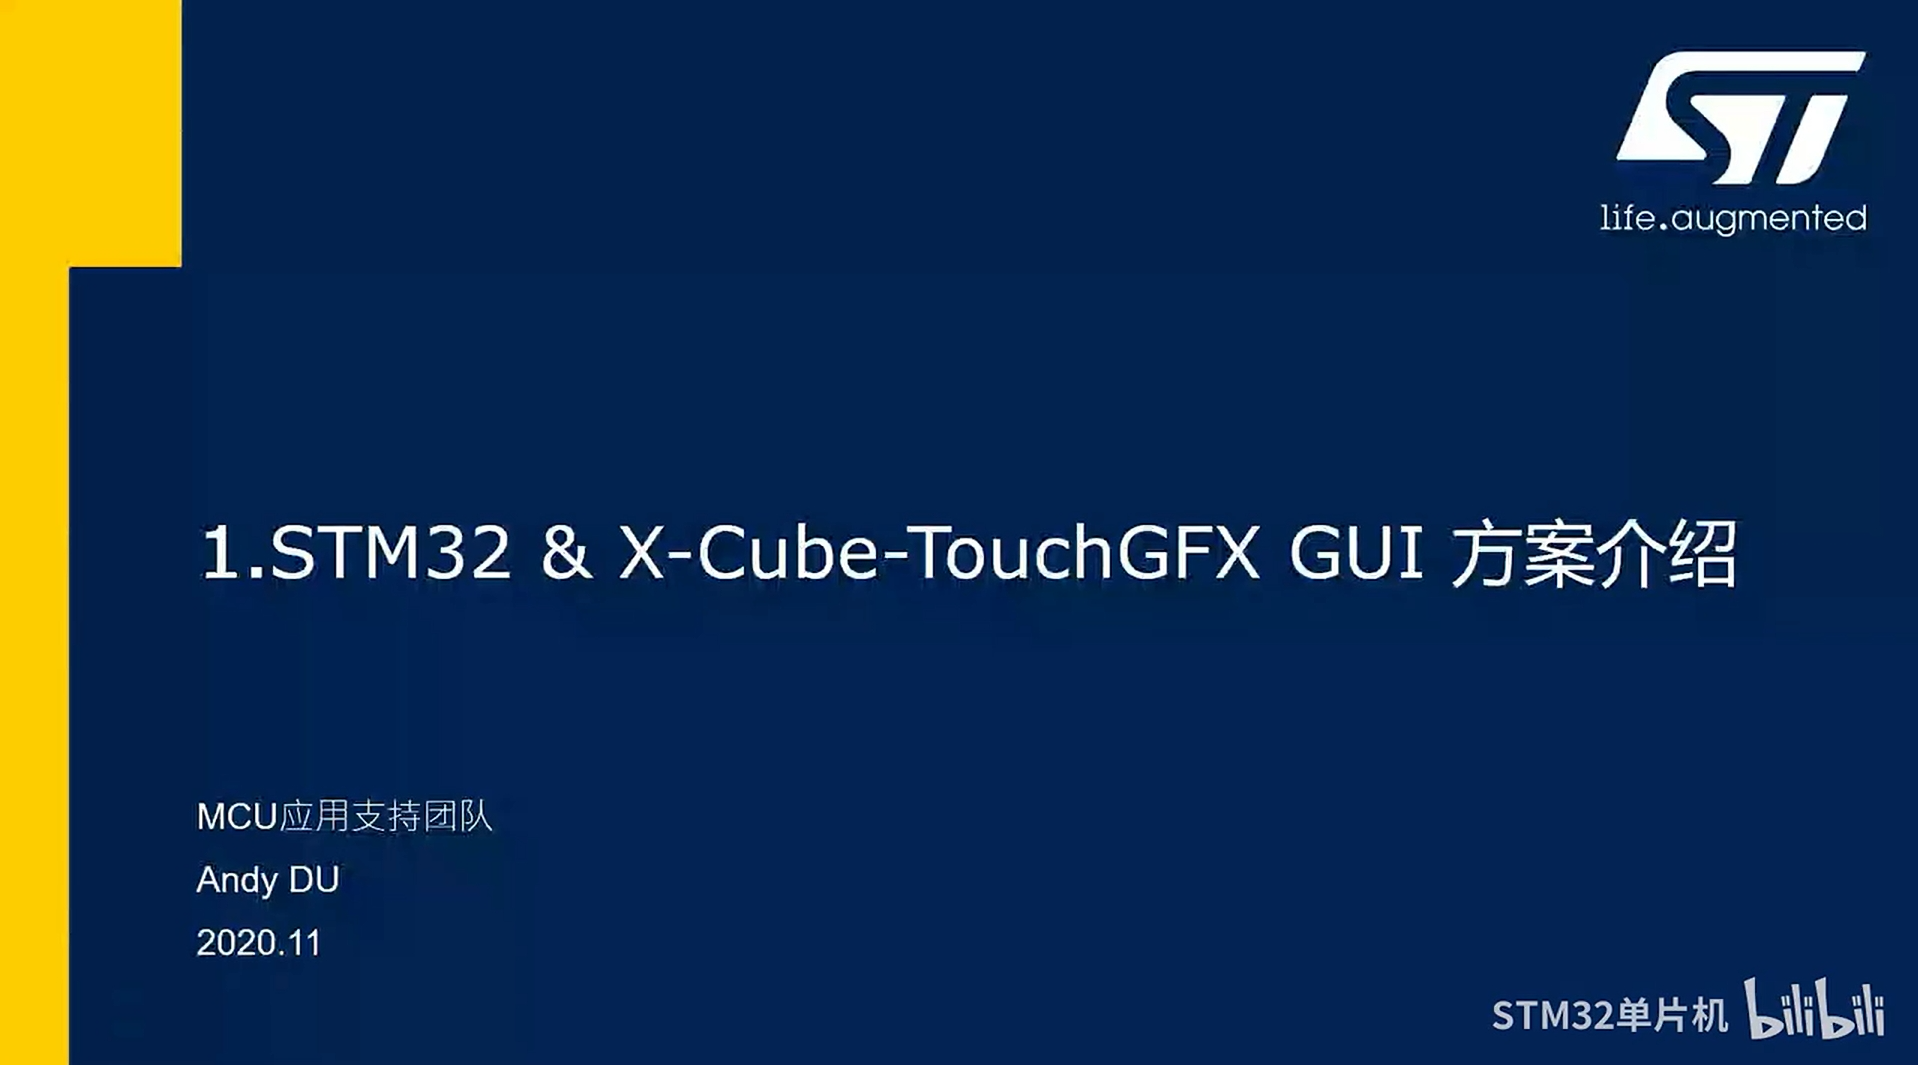 1.Stm32 & X-Cube-Touchgfx方案介绍